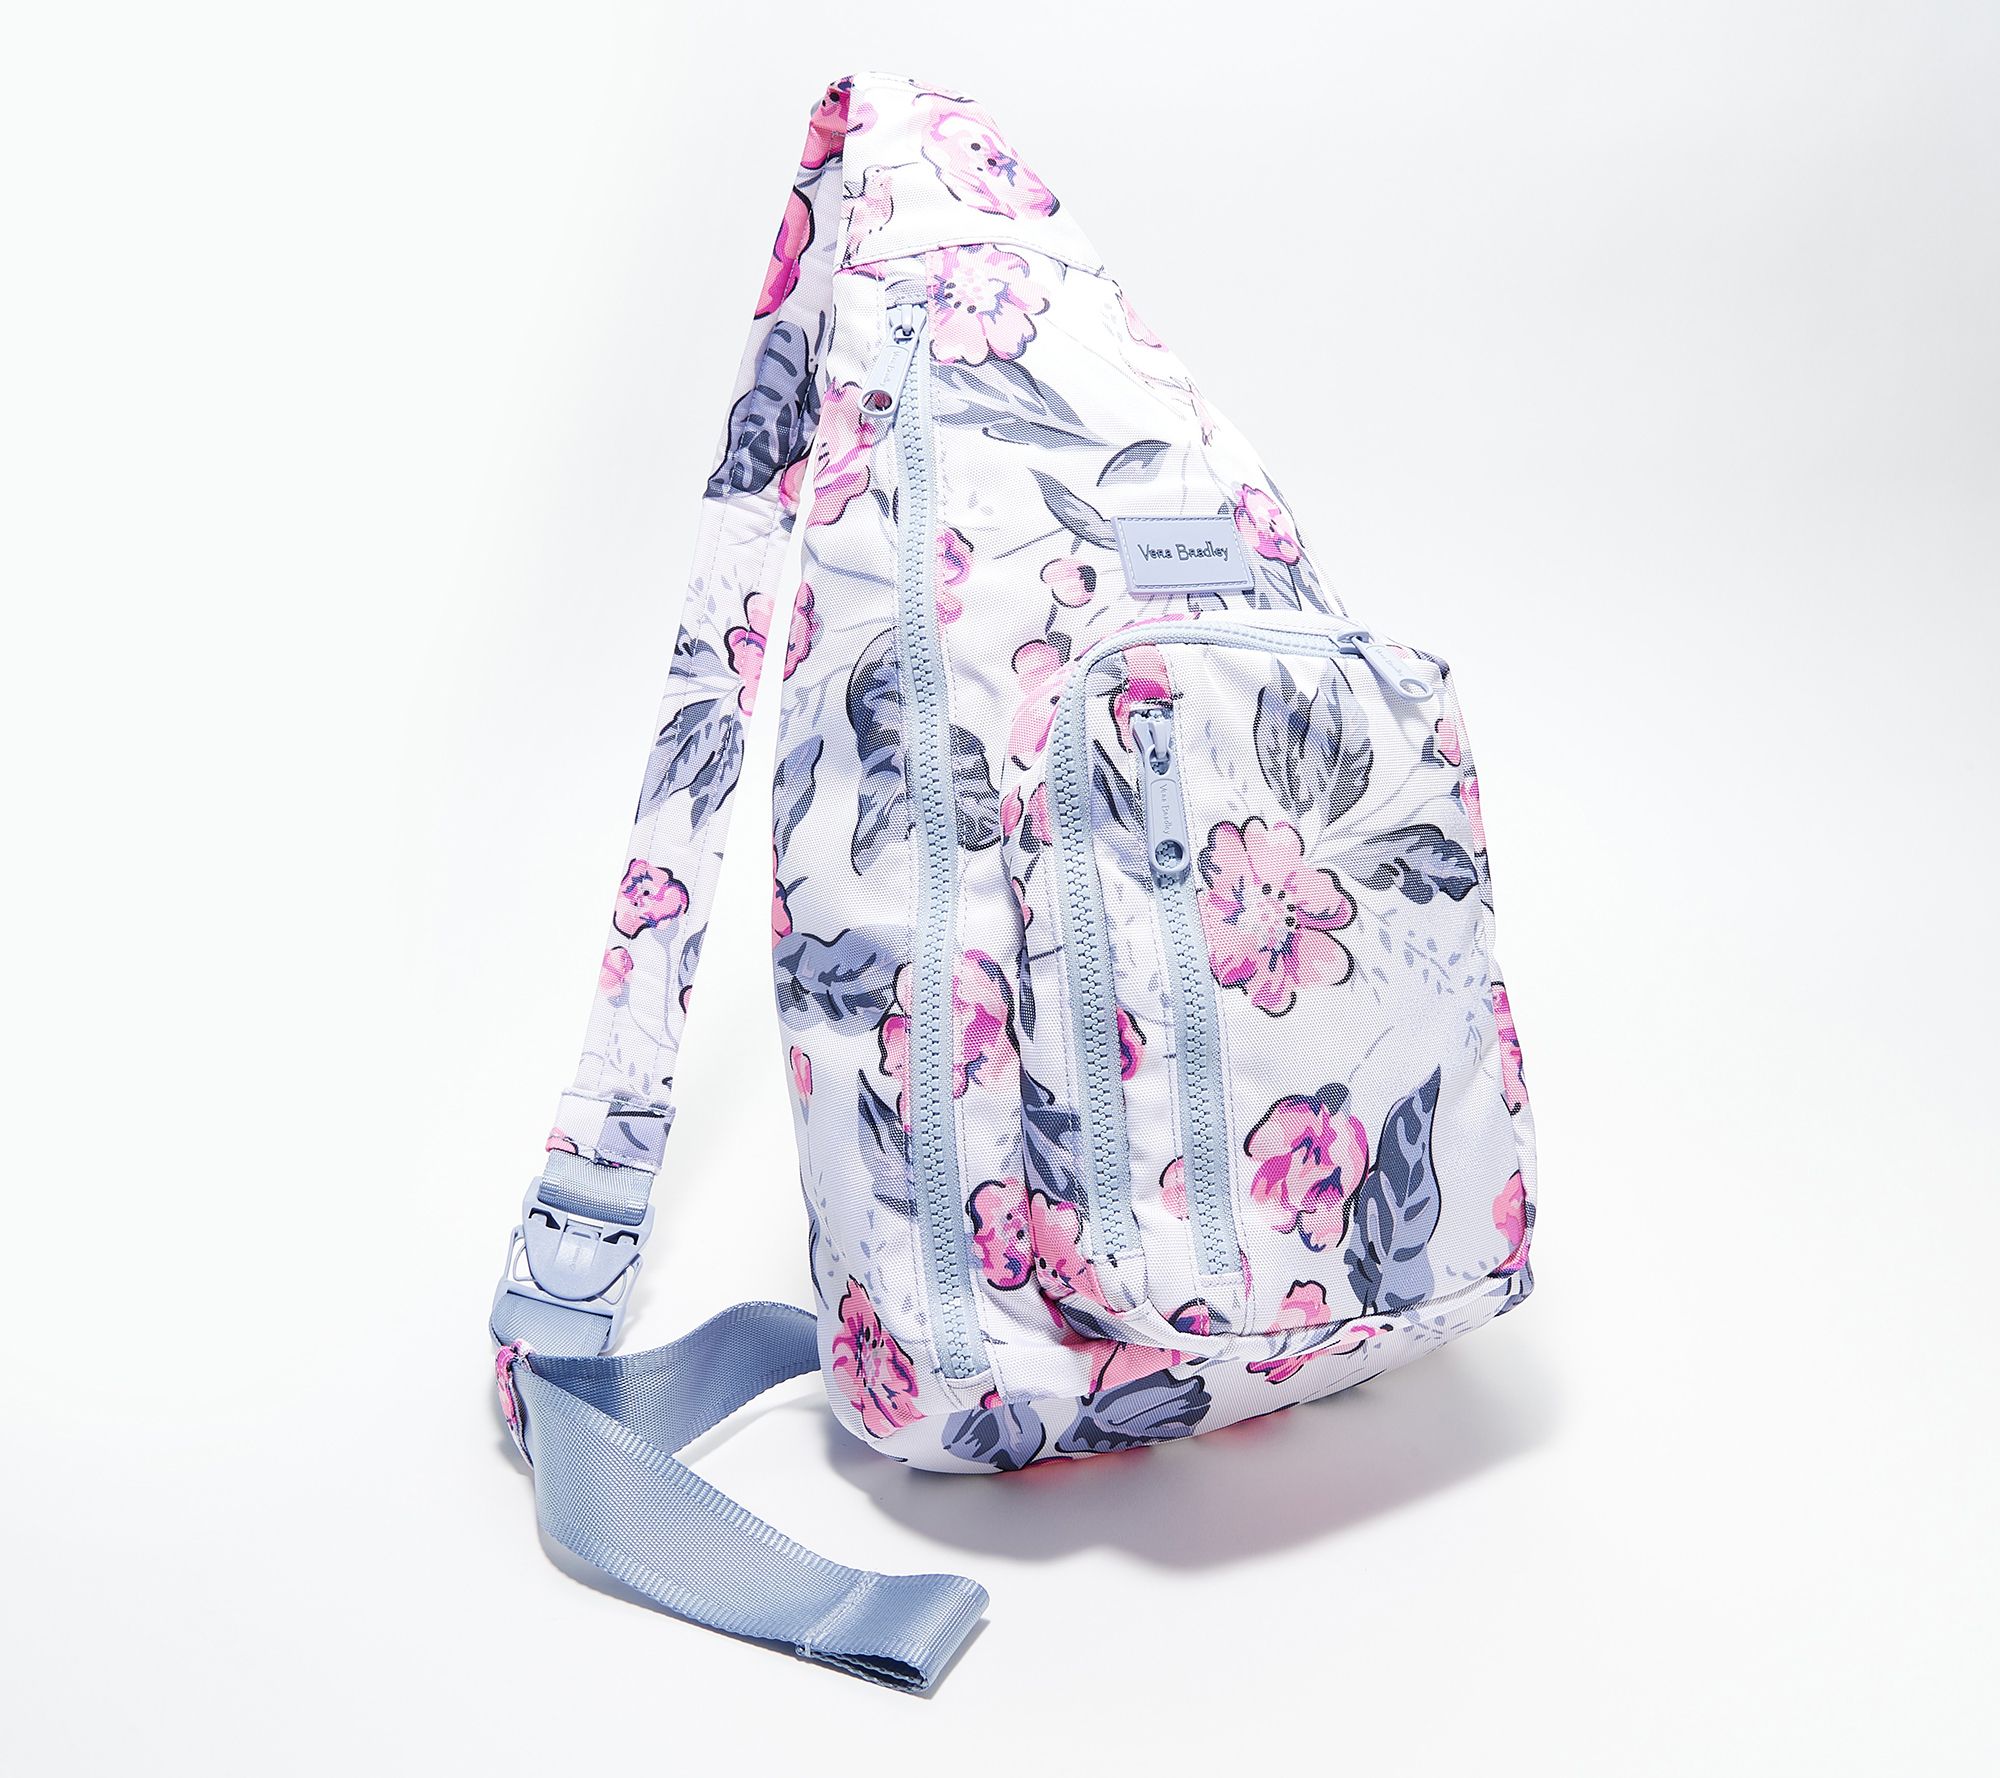 Waterproof Non-Slip Wearable Crossbody Bag fitness bag Shoulder Bag Fruit Snack Picture